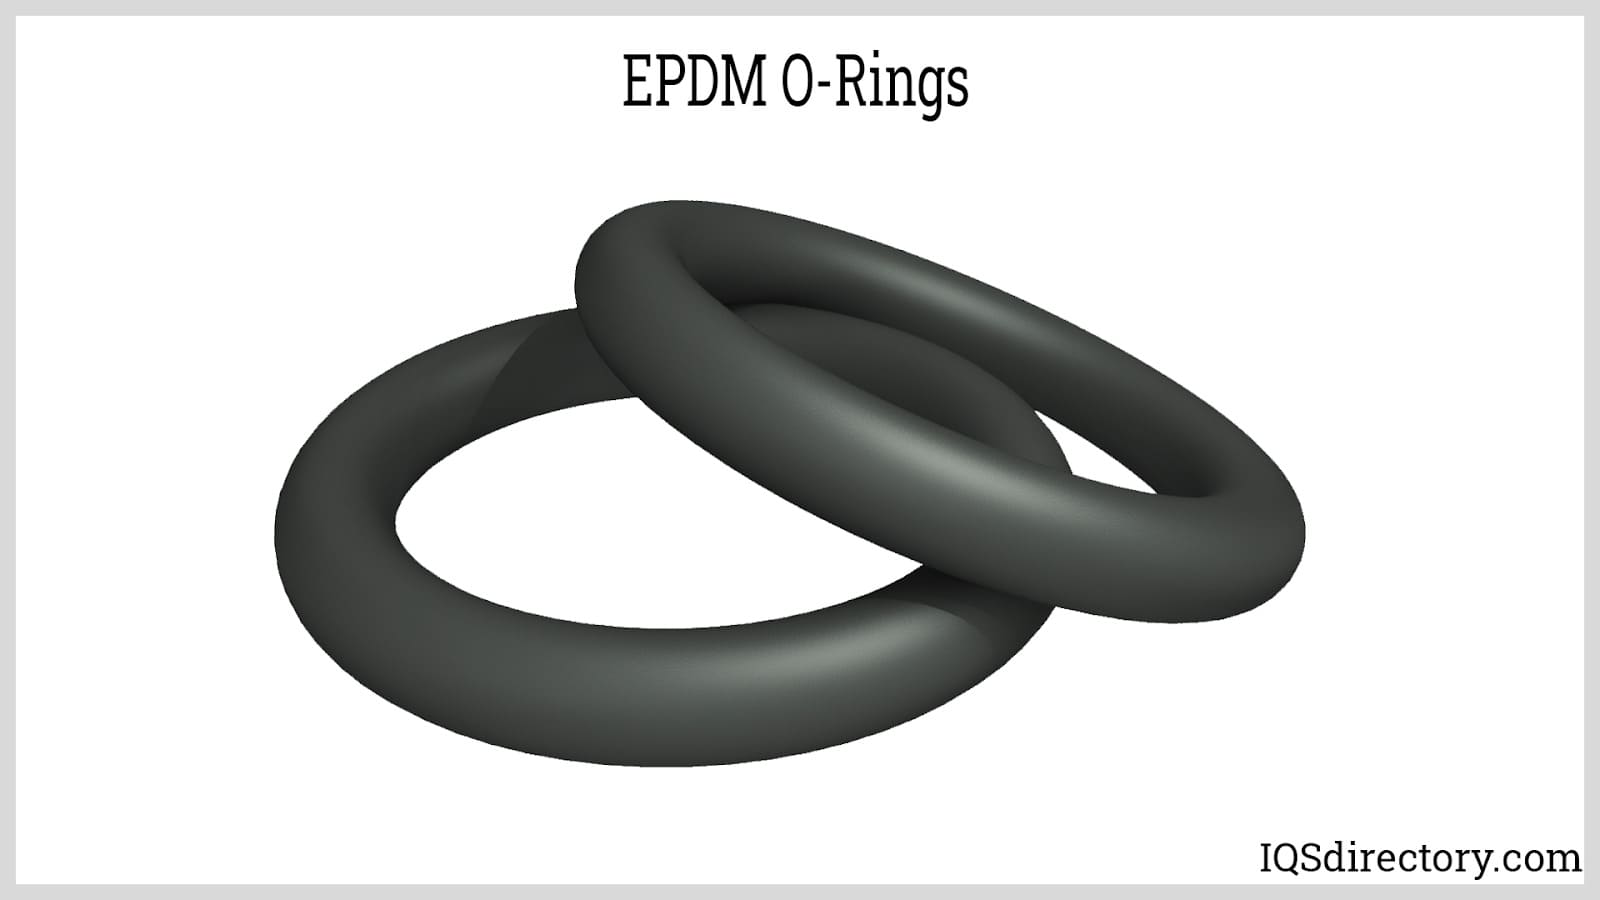 O-Ring Manufacturers